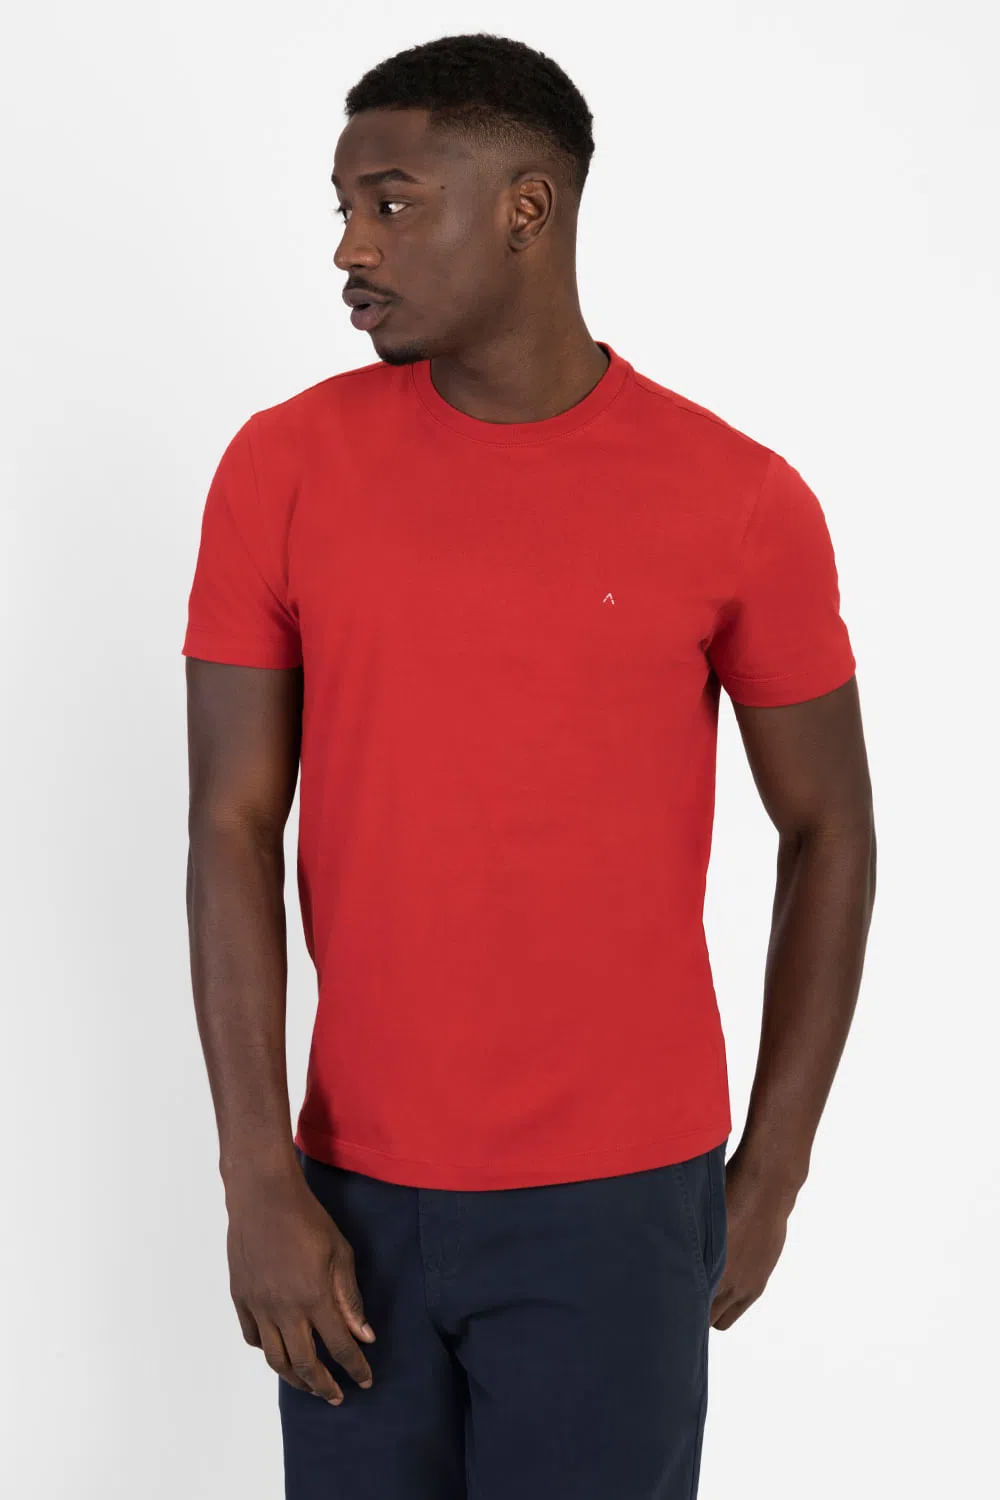 Camiseta Aramis Malha Gola Careca Básica Vermelho - Garm Store